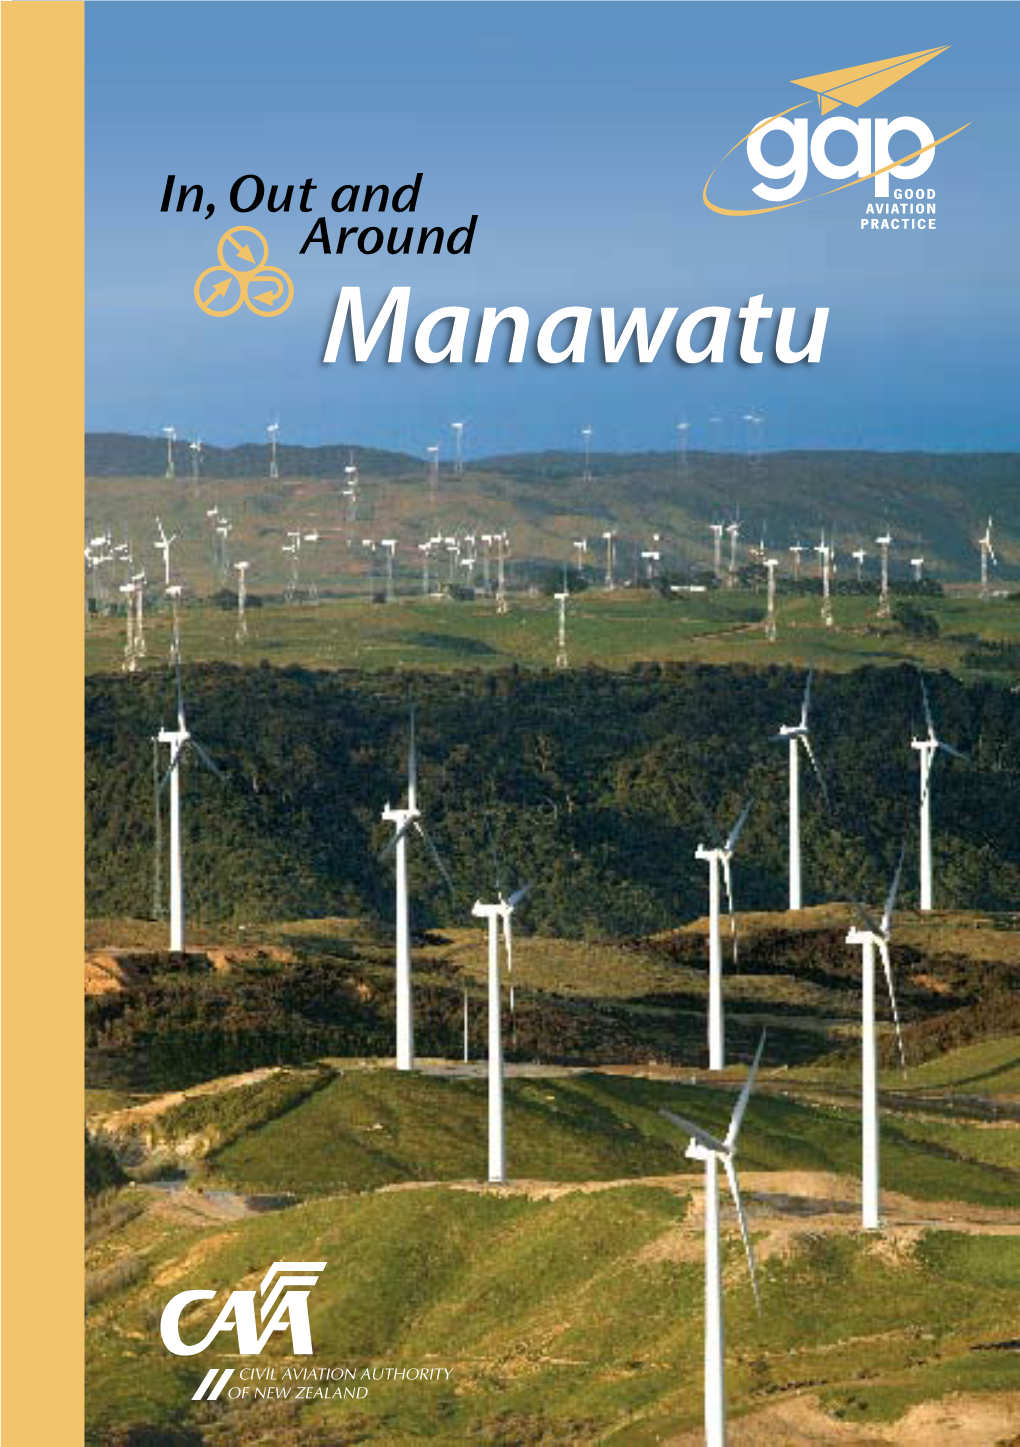 Manawatu Aviation Club